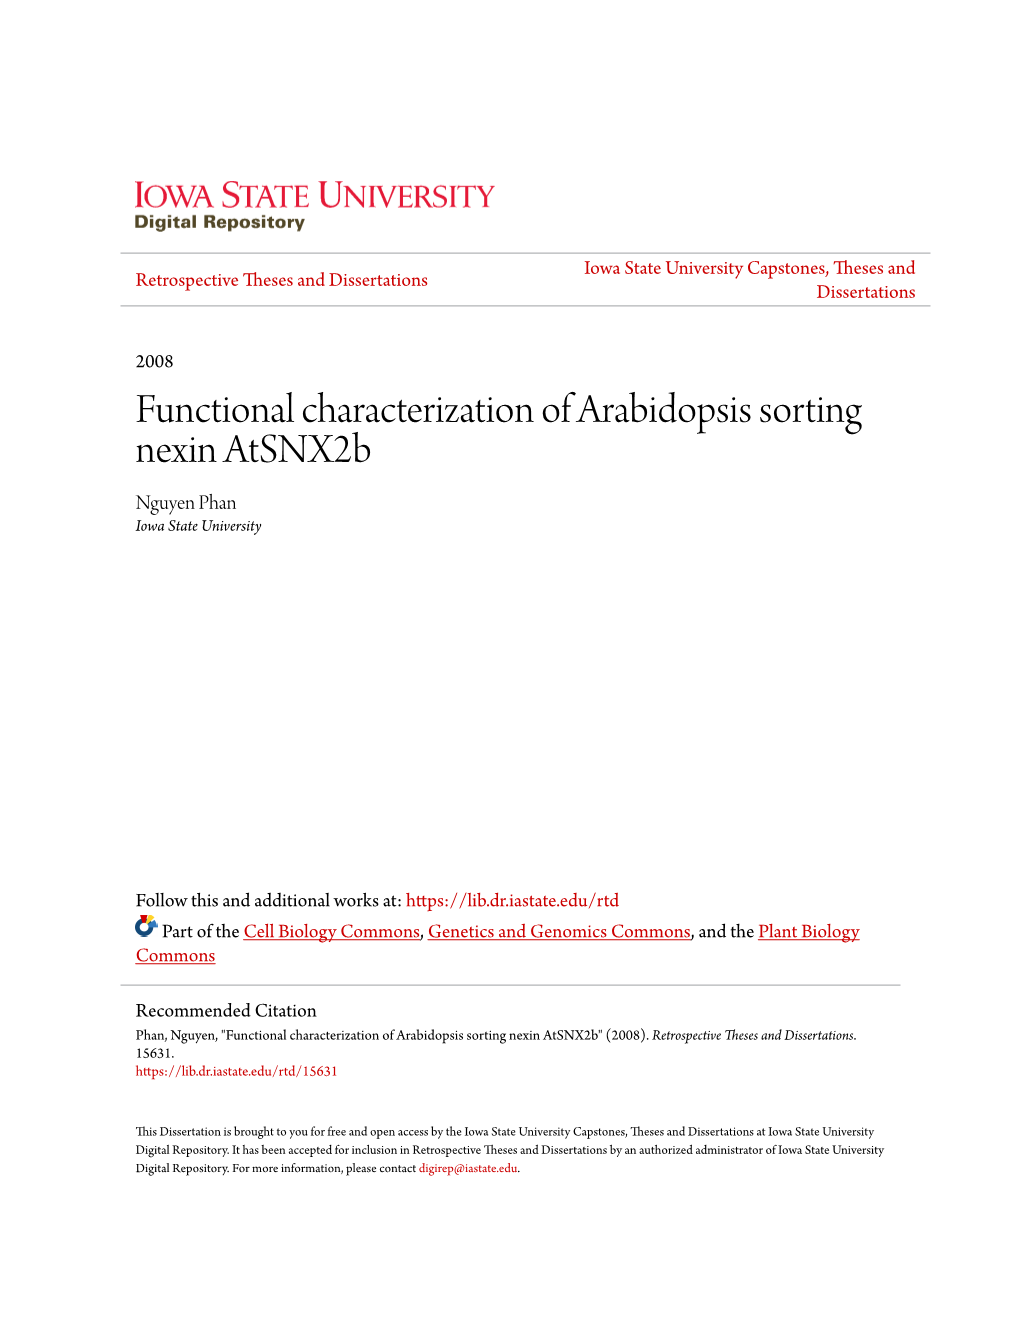 Functional Characterization of Arabidopsis Sorting Nexin Atsnx2b Nguyen Phan Iowa State University